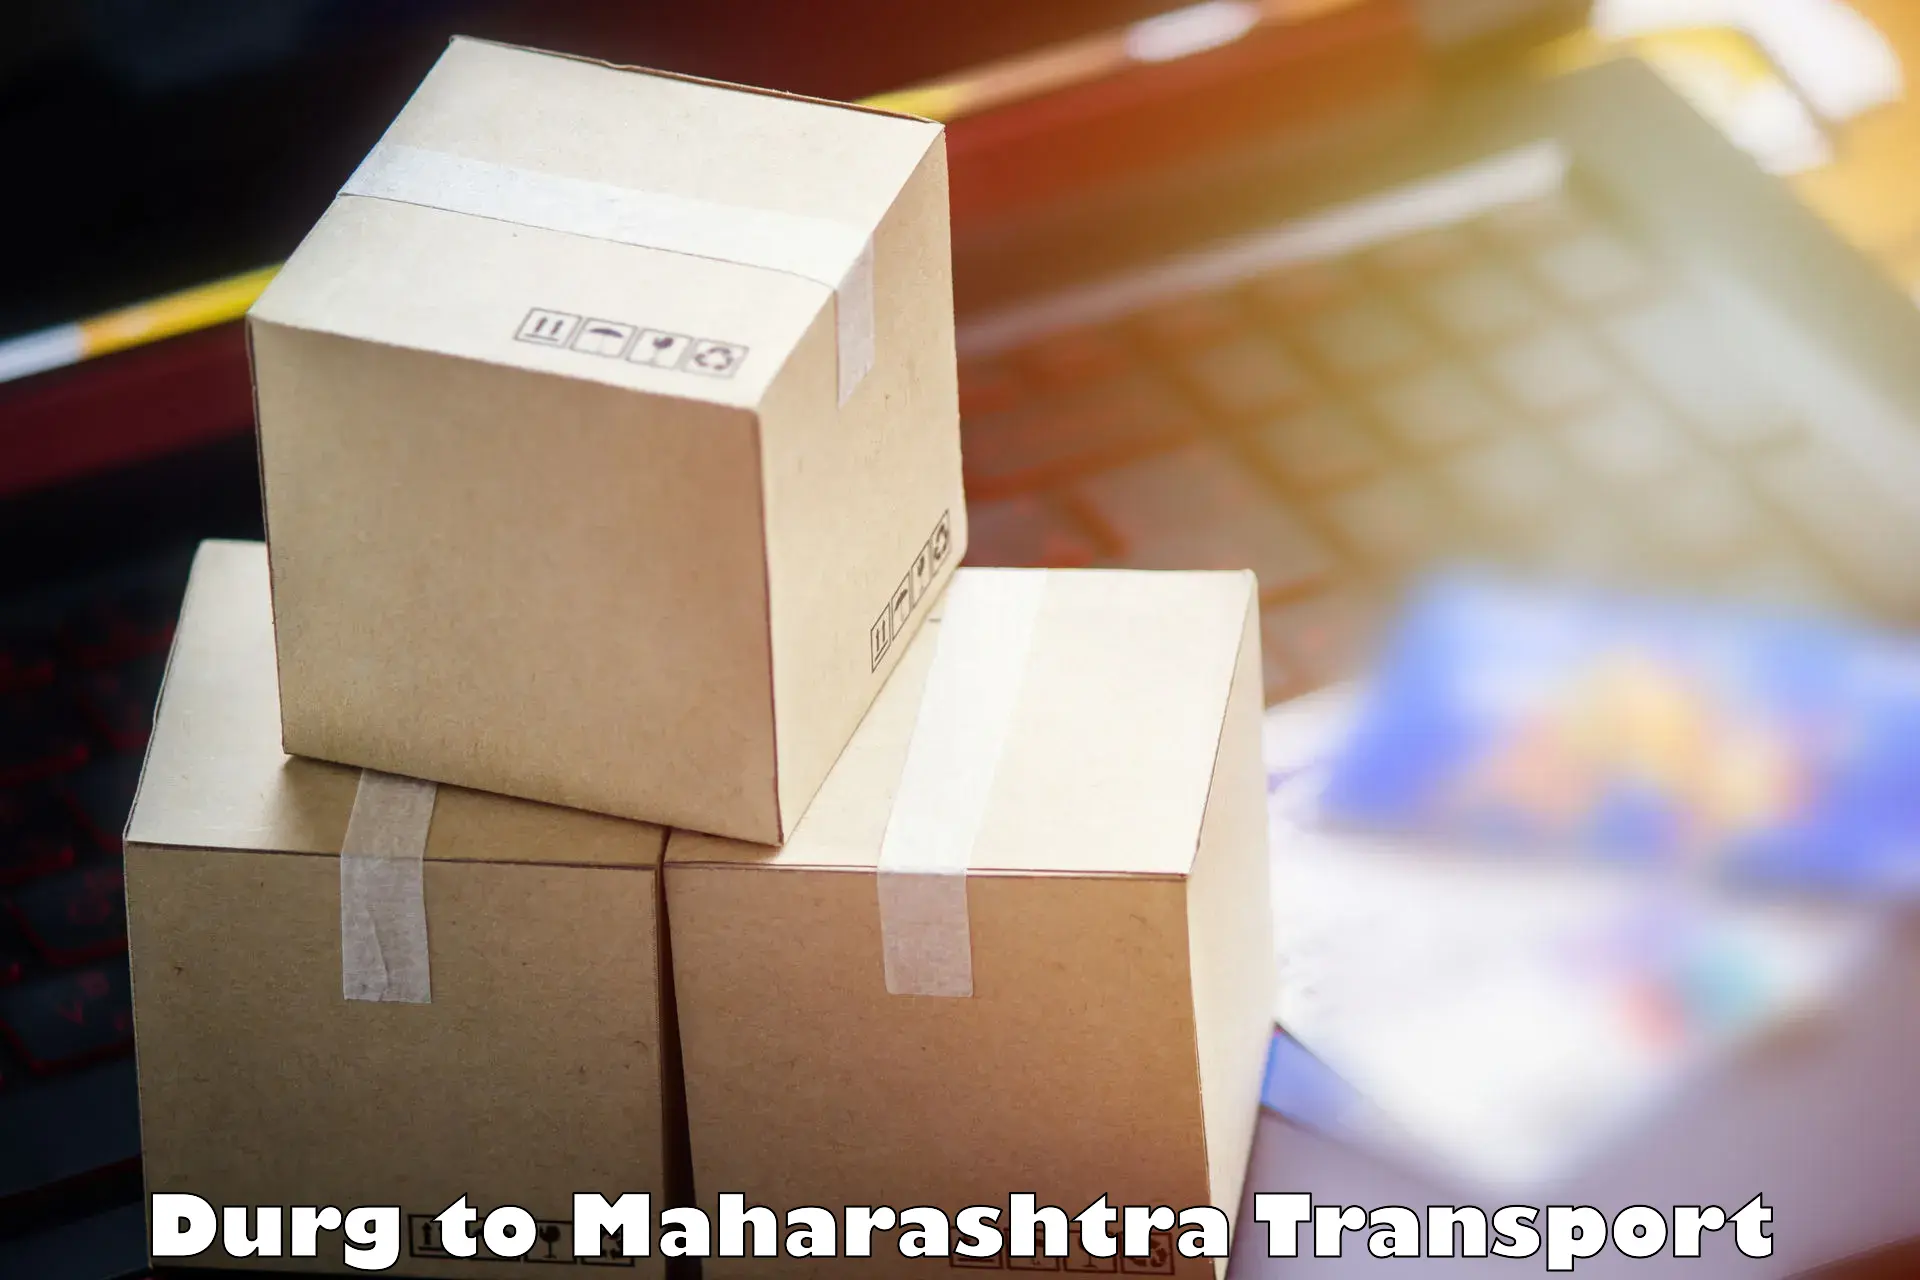 Online transport service Durg to Maharashtra